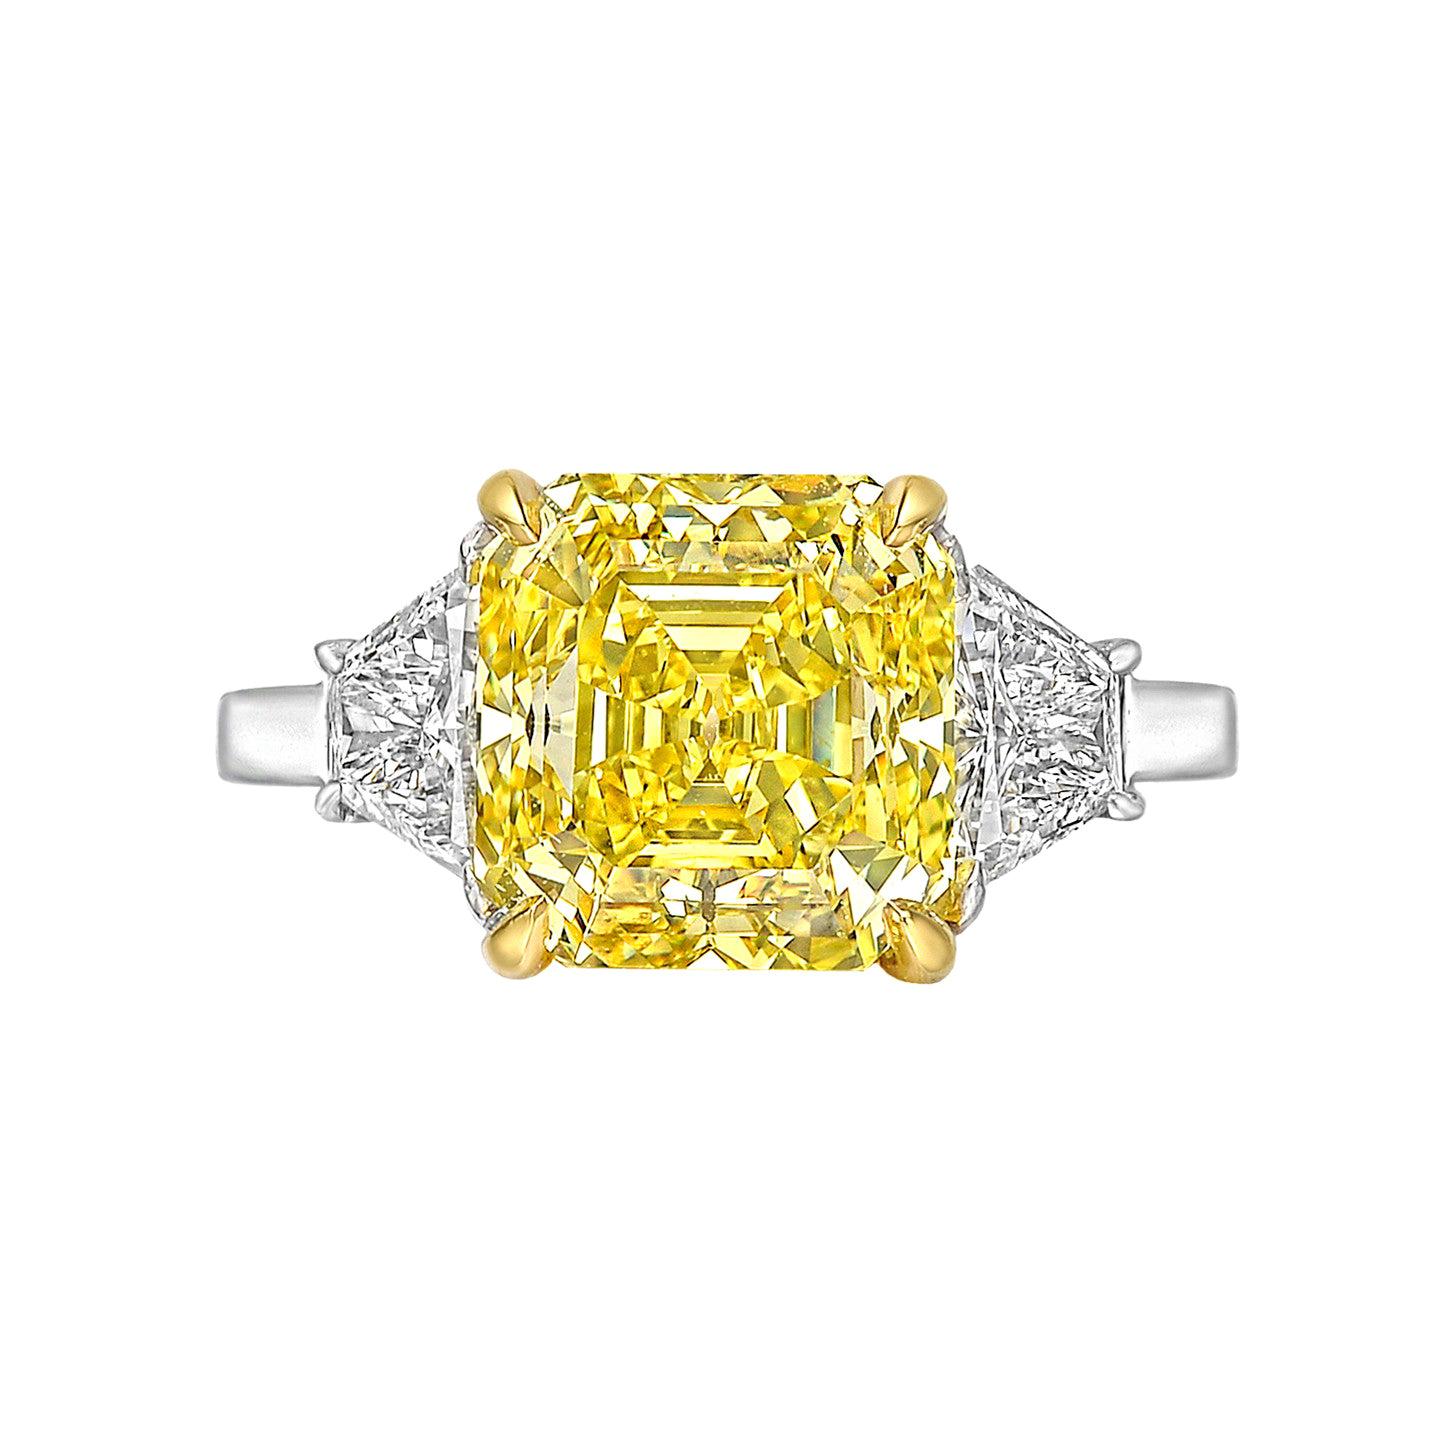 5.03 Carat Fancy Vivid Yellow Diamond Ring 'VS1' For Sale